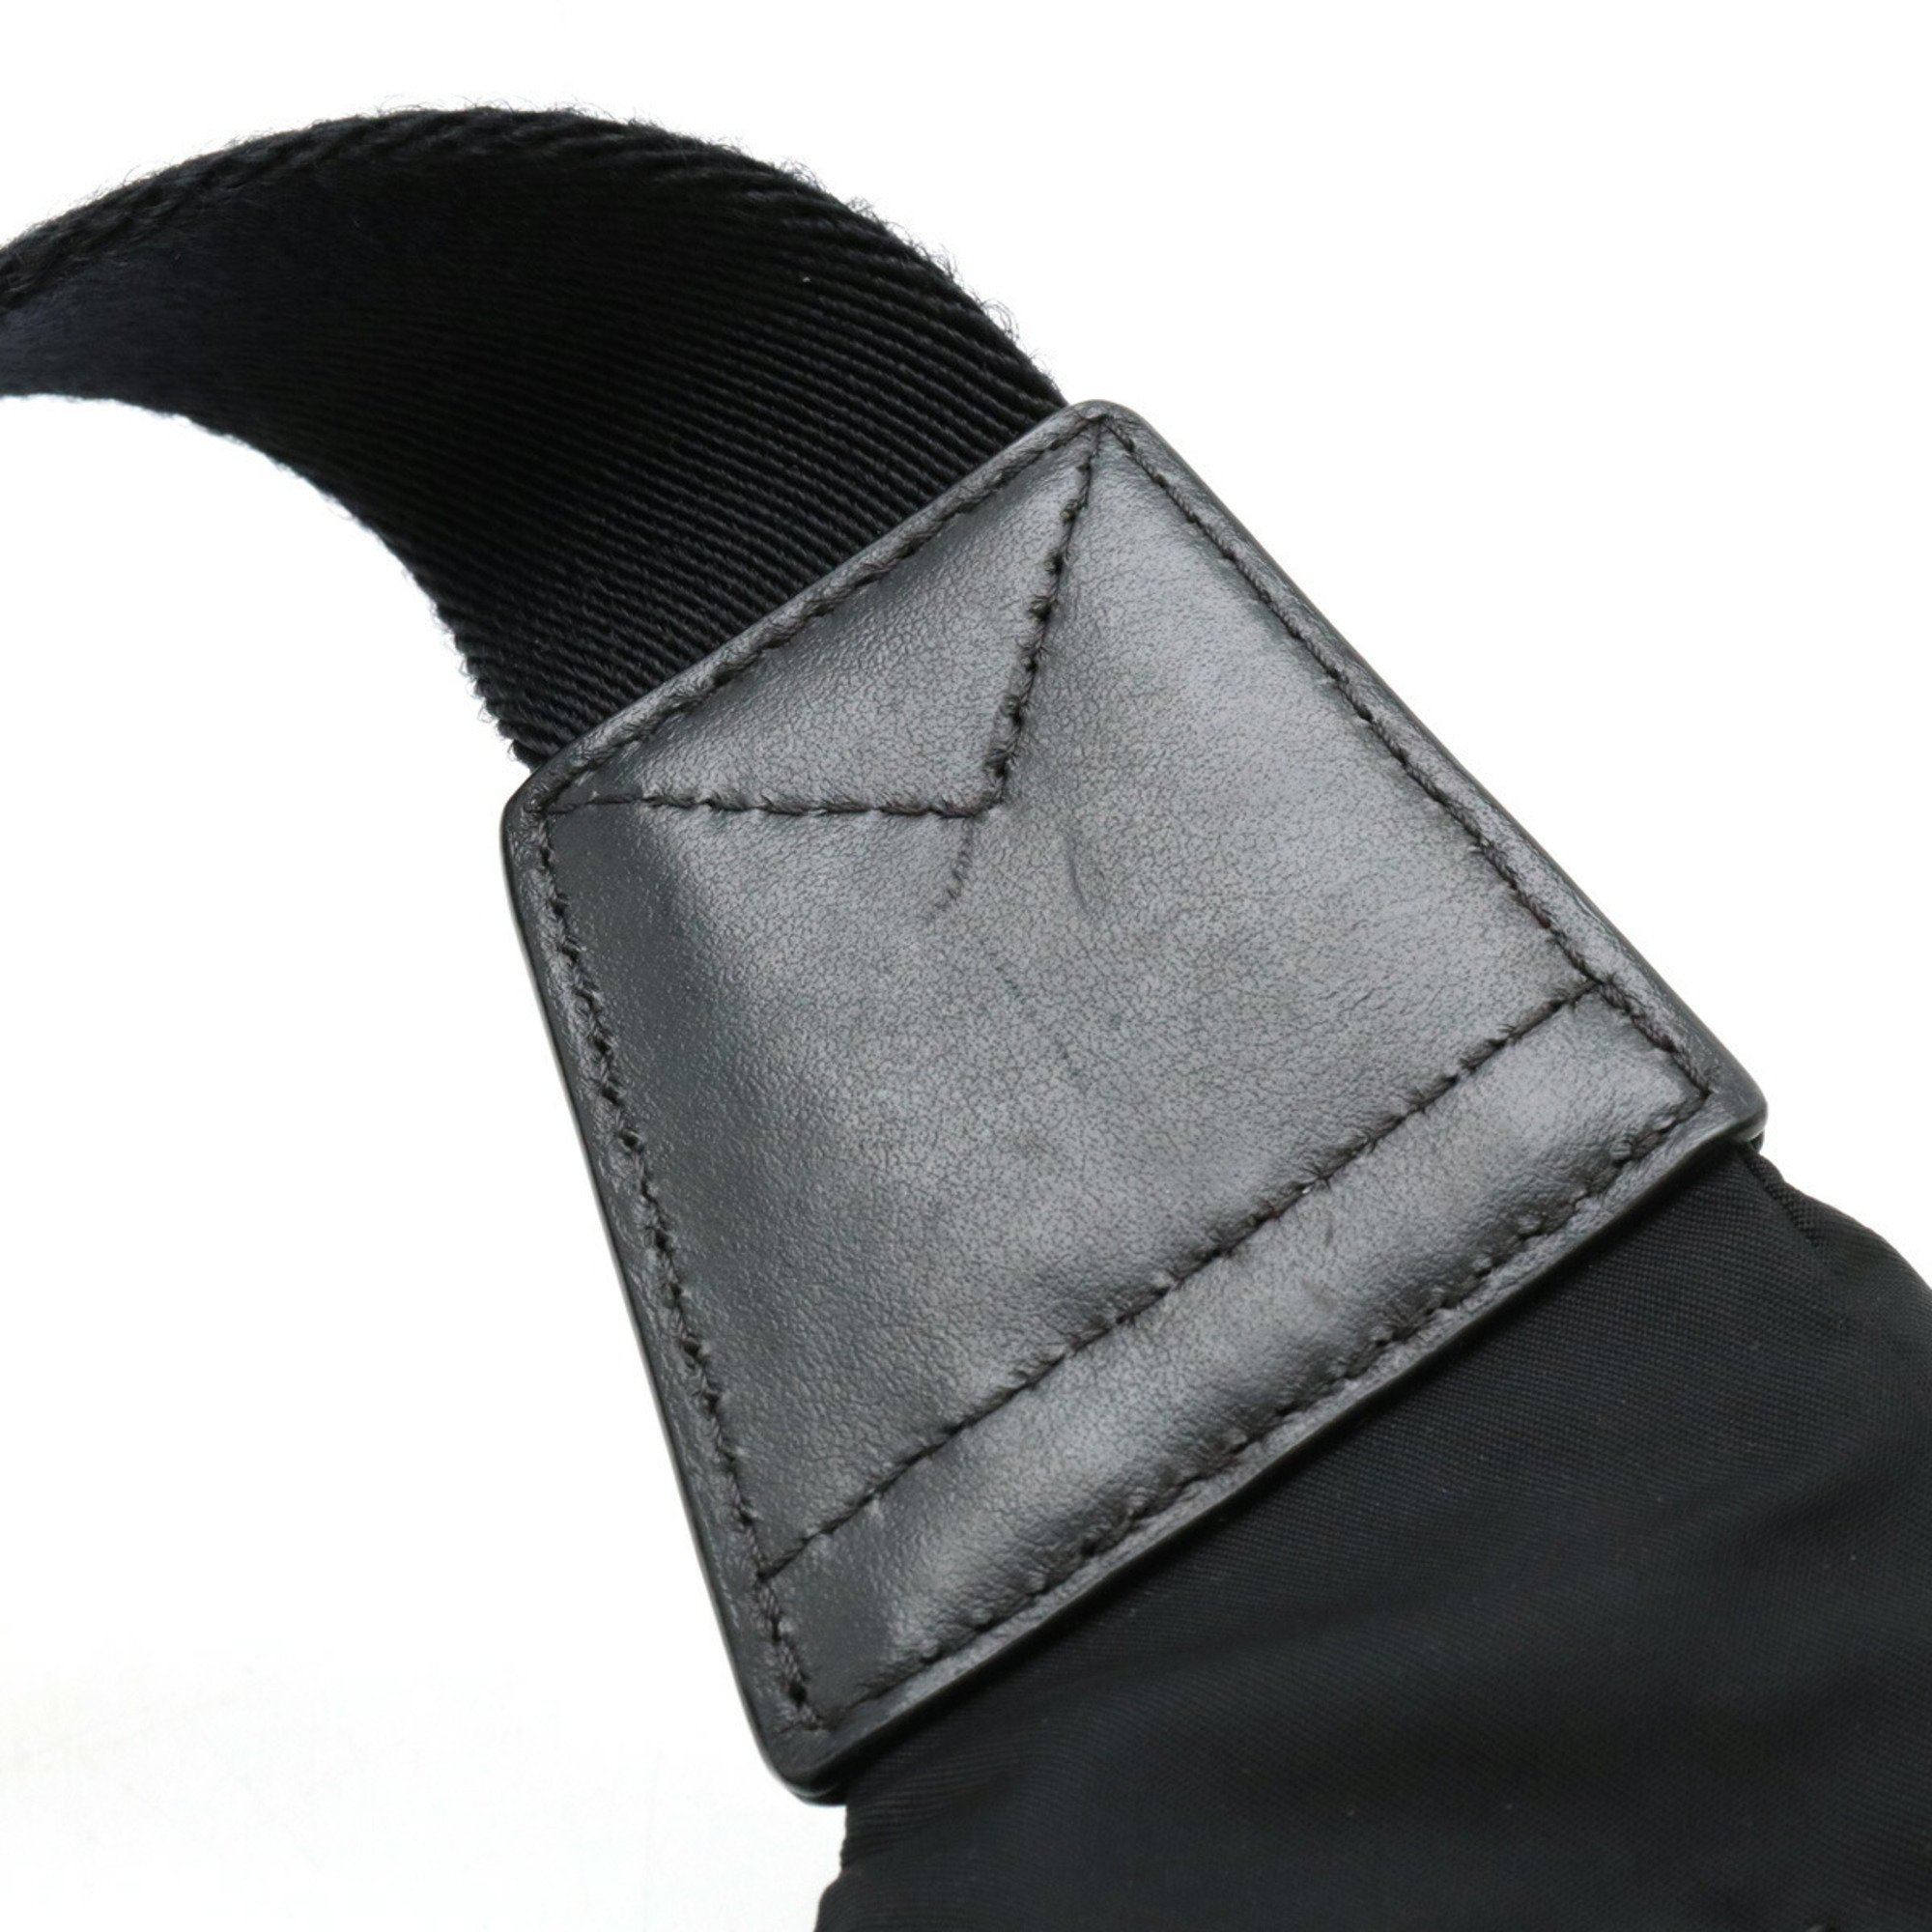 BURBERRY SONNY Body bag, bum waist pouch, nylon, leather, black, 8025668